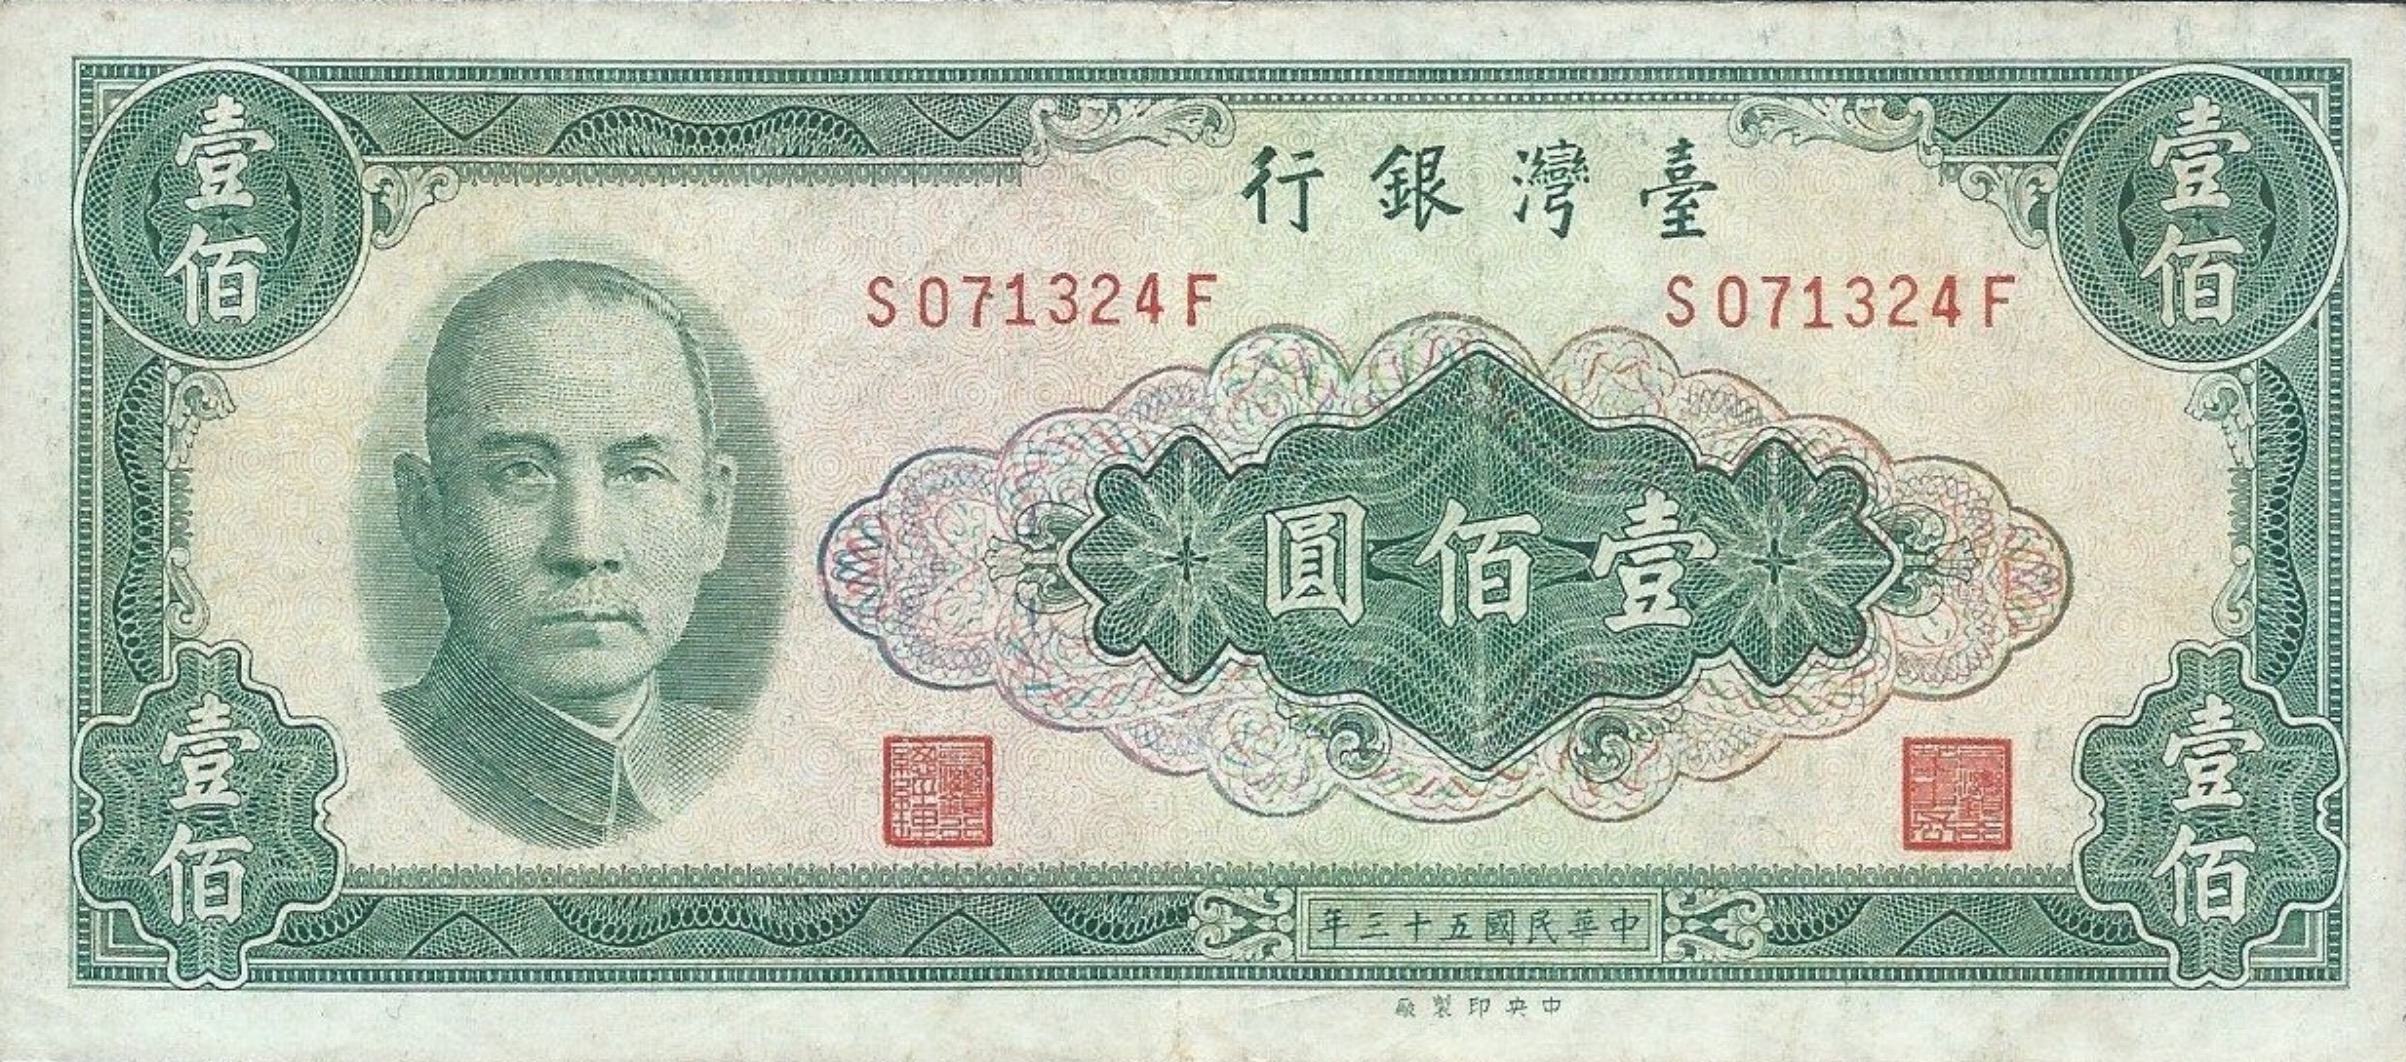 Тайвань деньги. Банкнота 100 юаней Тайвань. 500 Юань Тайваня банкнота. Тайваньский доллар. Тайвань купюра 100.